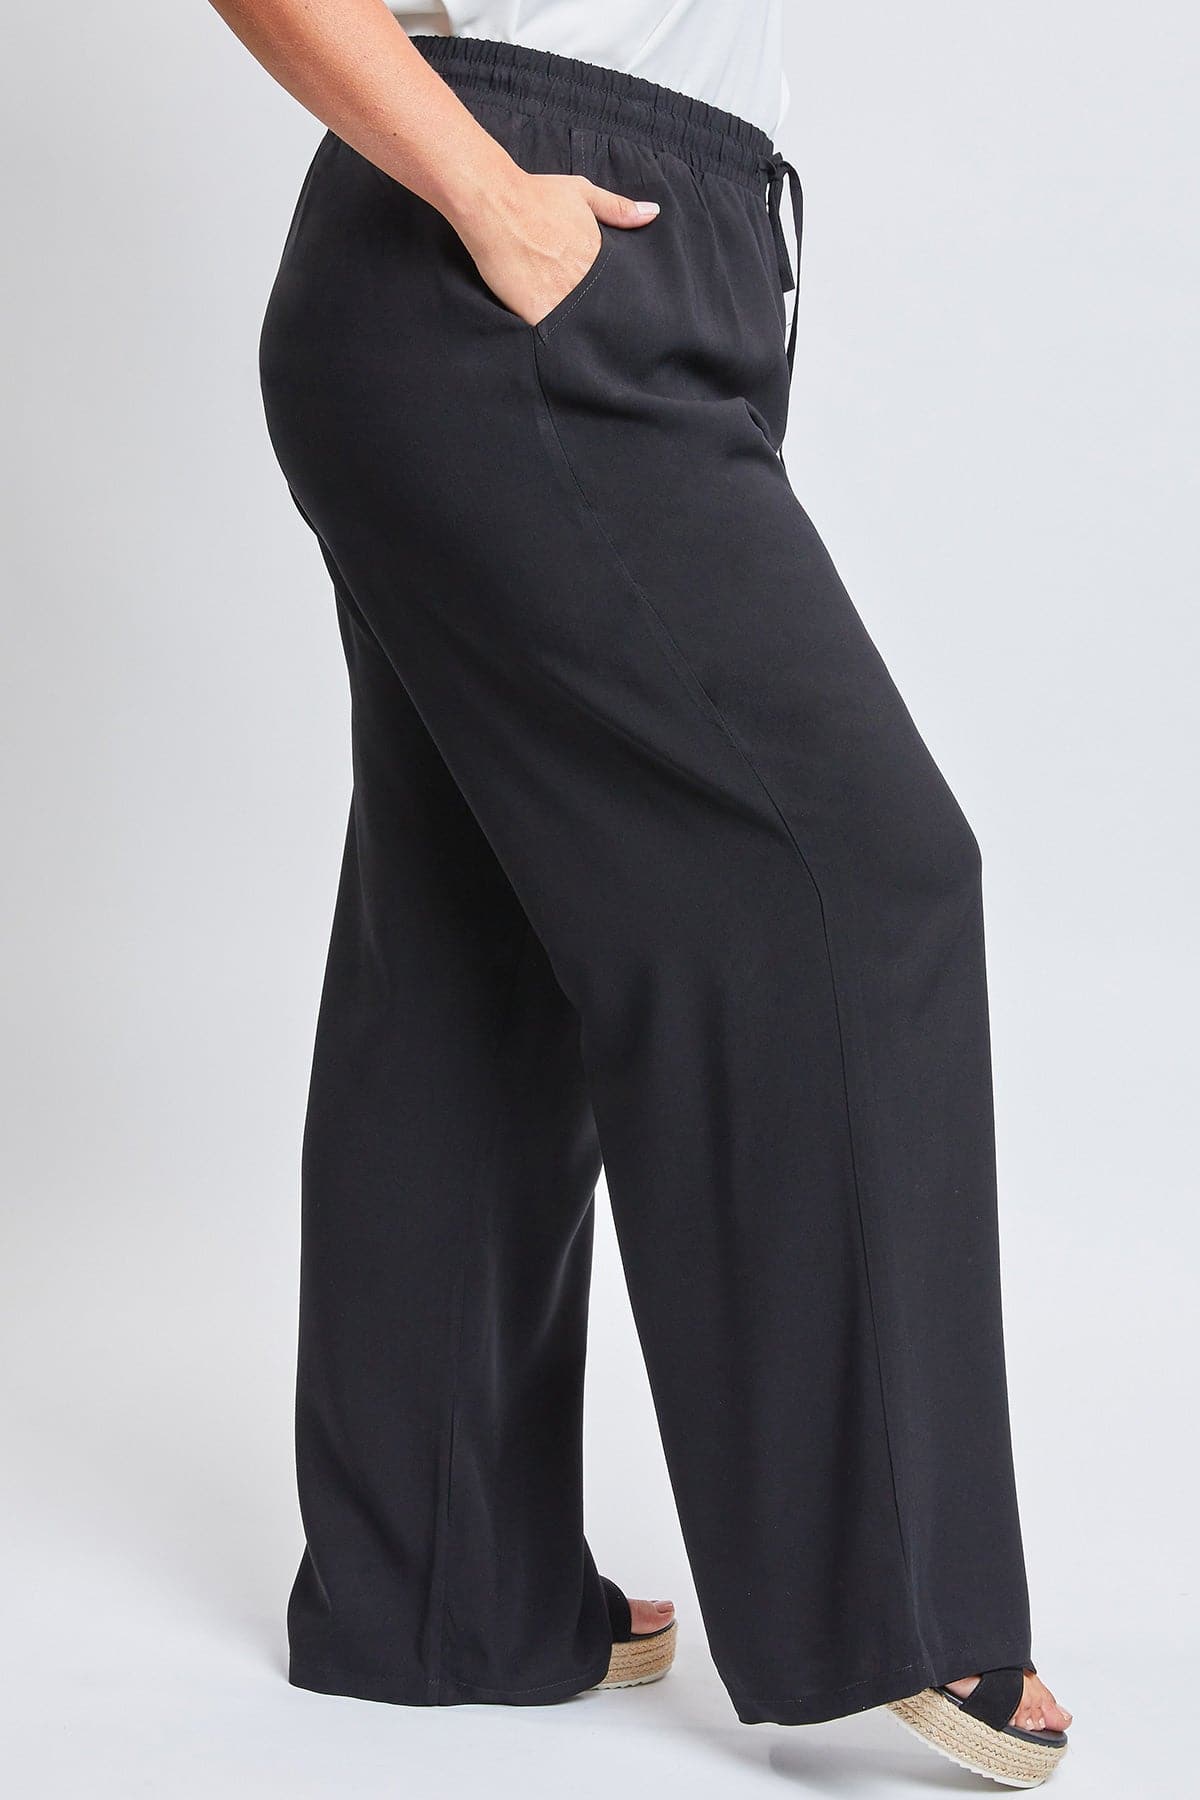 Women's Plus Size High Rise Drawstring Straight Pants